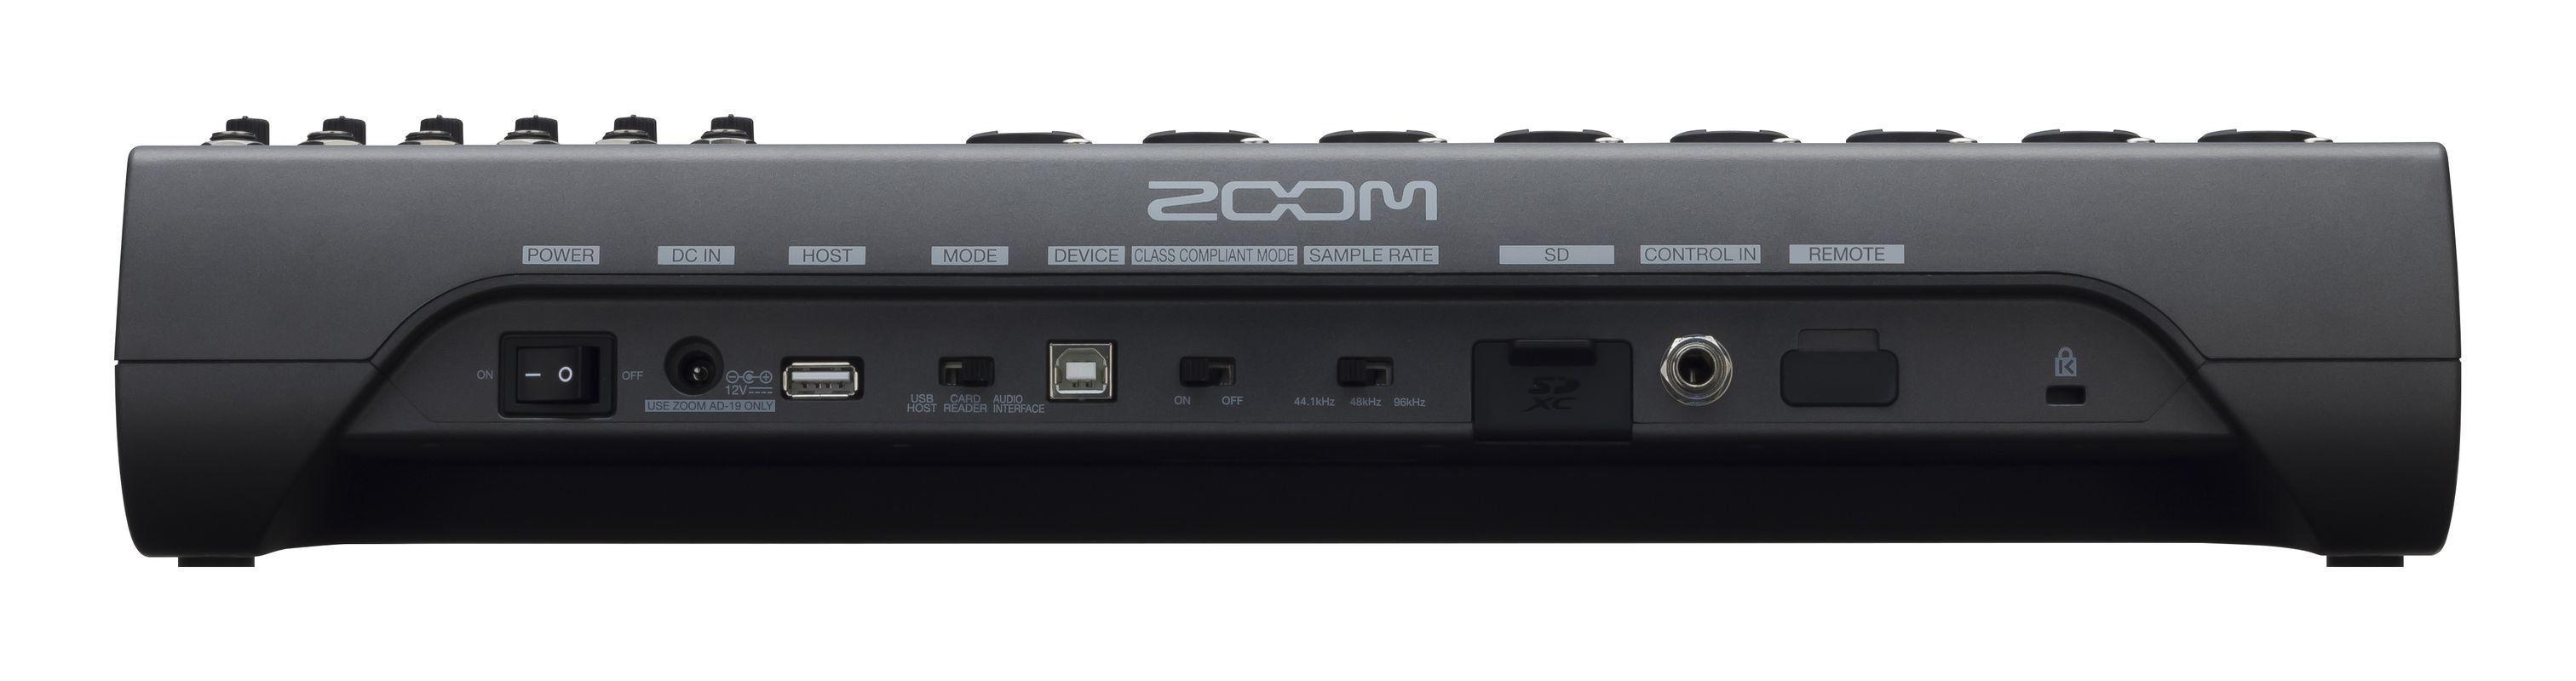 ZOOM Livetrak L-20 數位混音機錄音介面